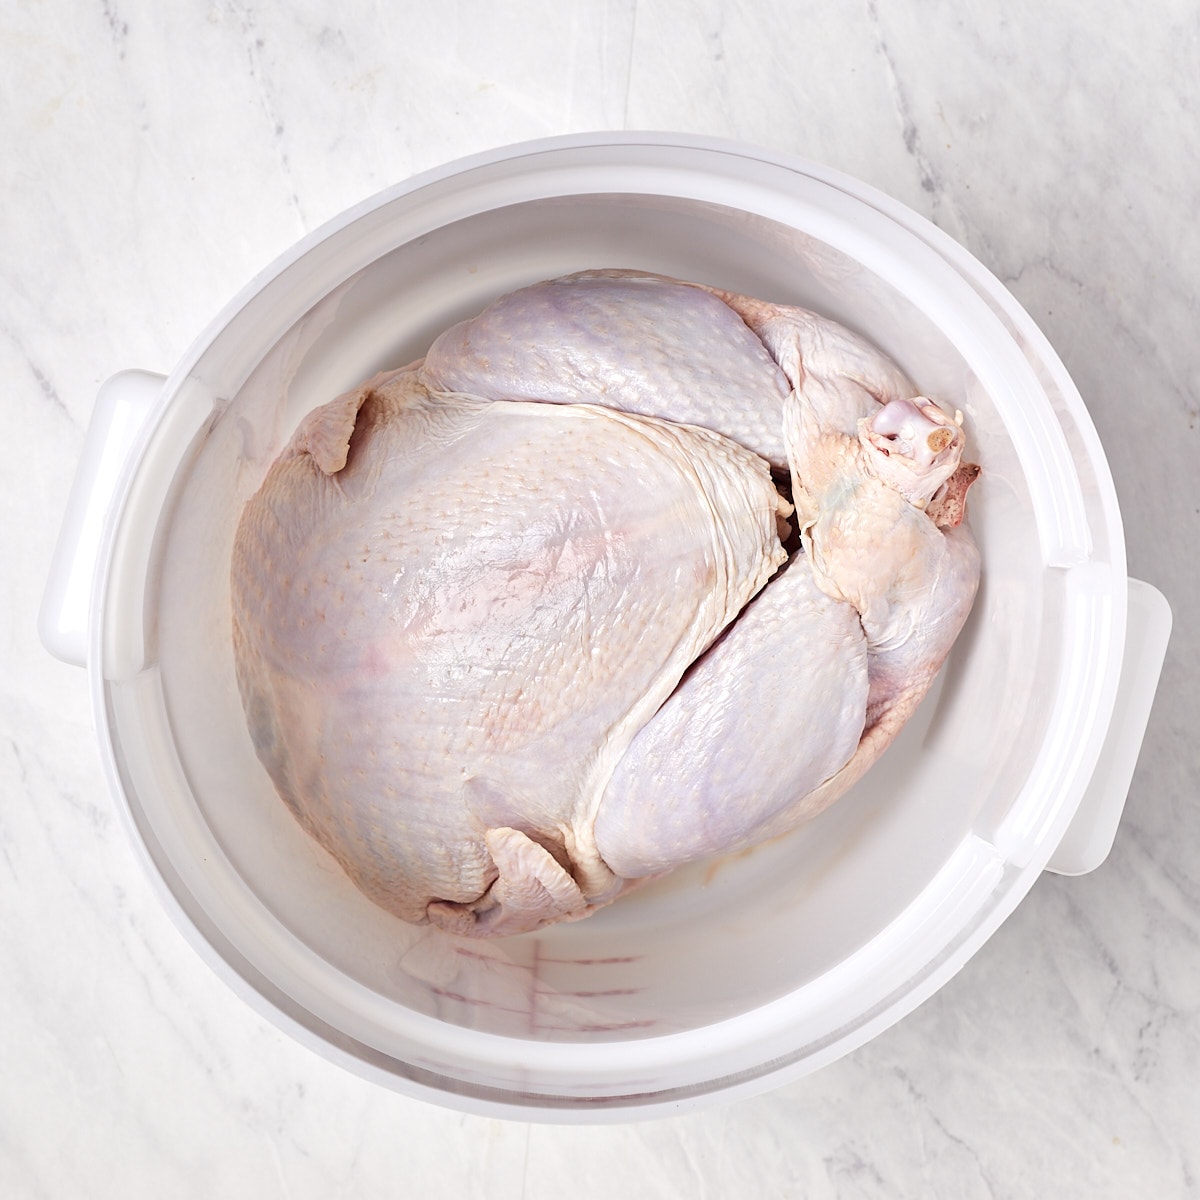 raw turkey in a food grade bucket before brine is added.